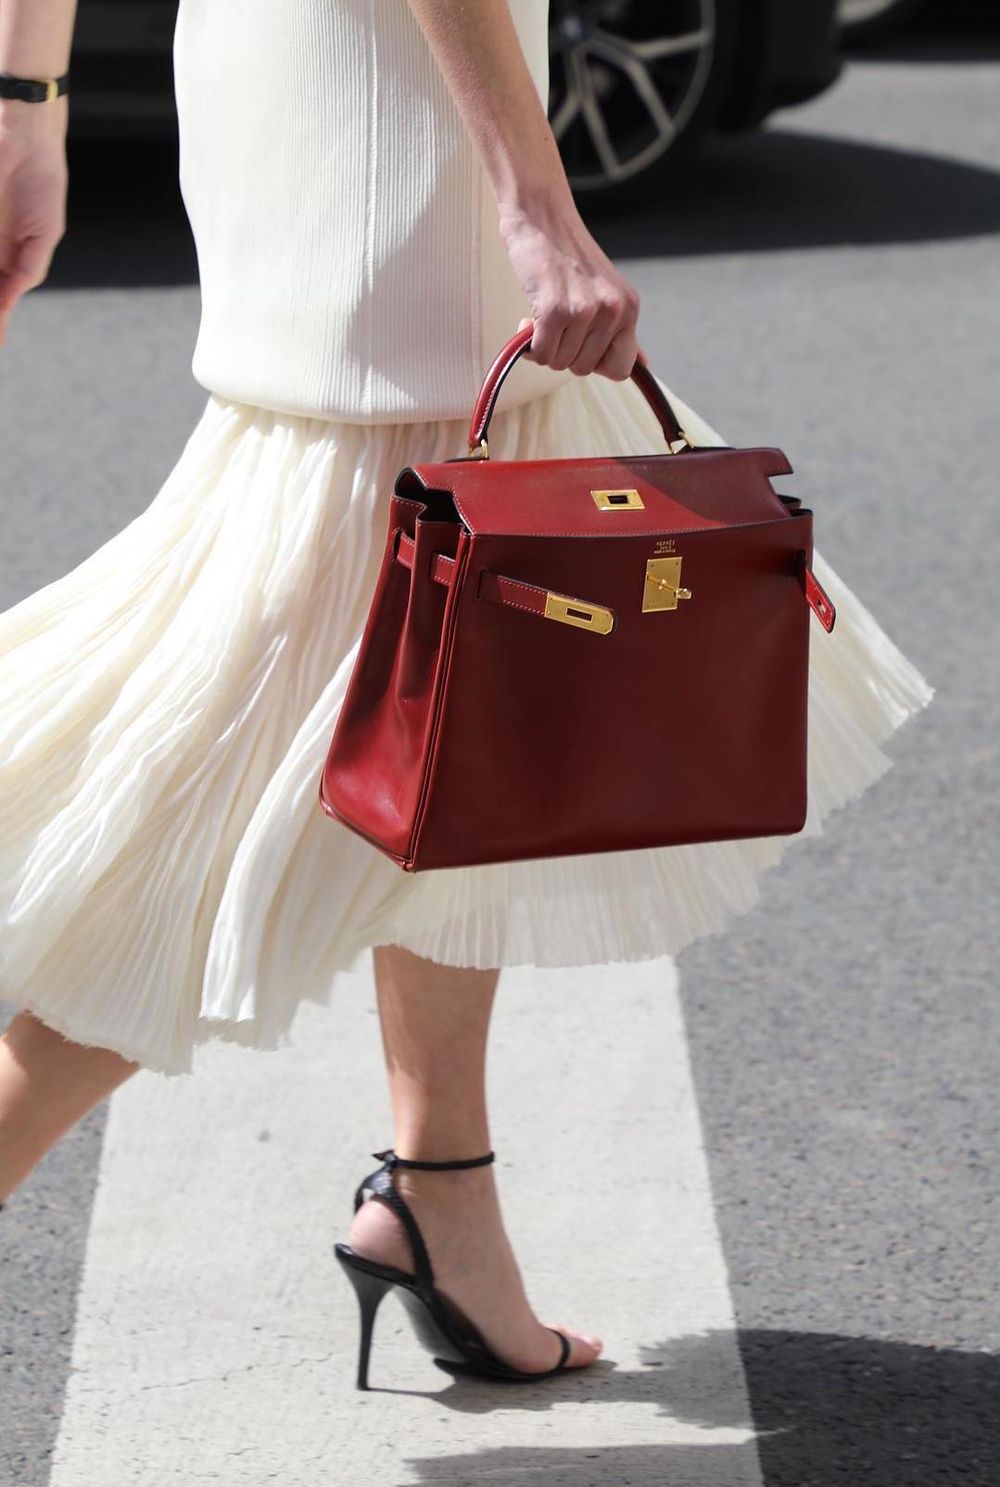 French handbag designers Hermes resee